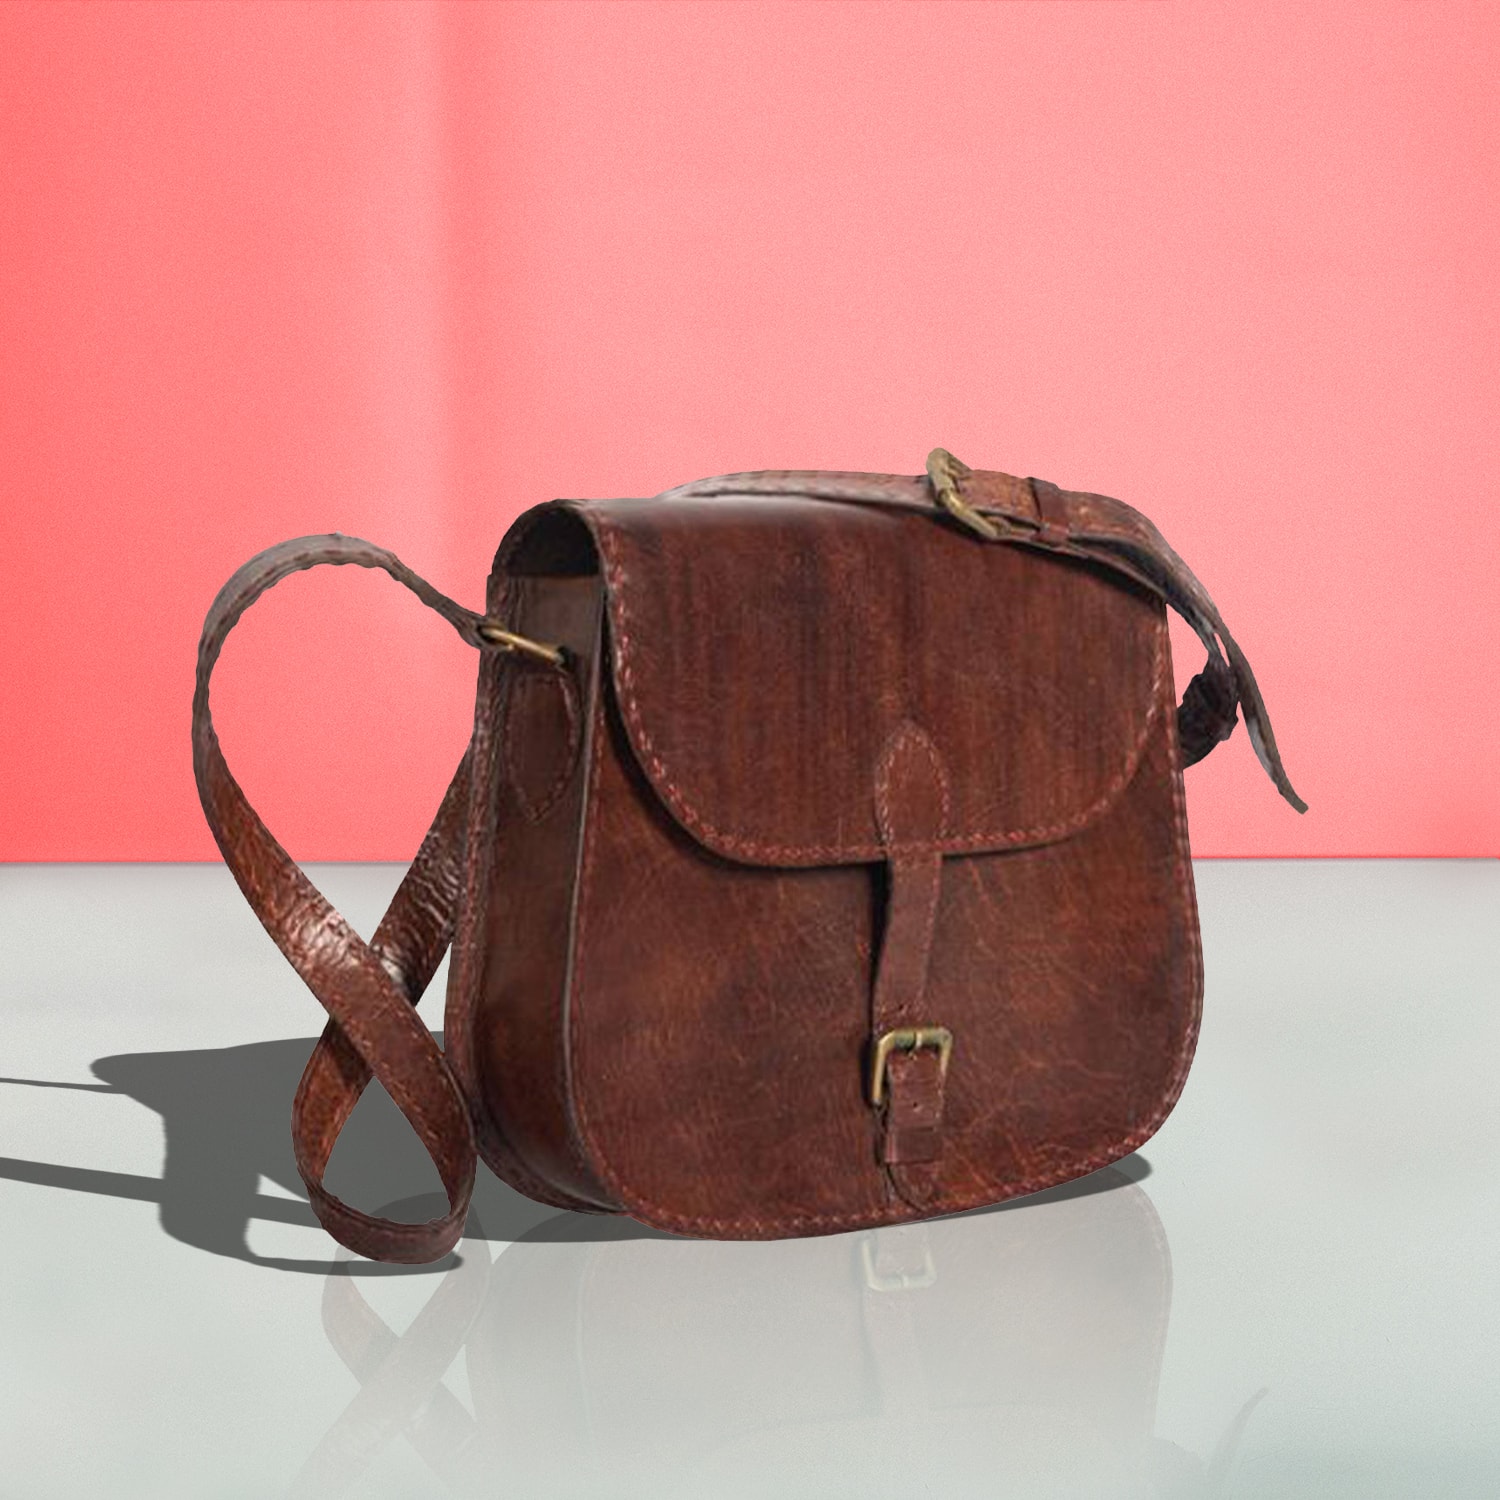 Women's Handbags | Bags & Purses for Women | Madewell